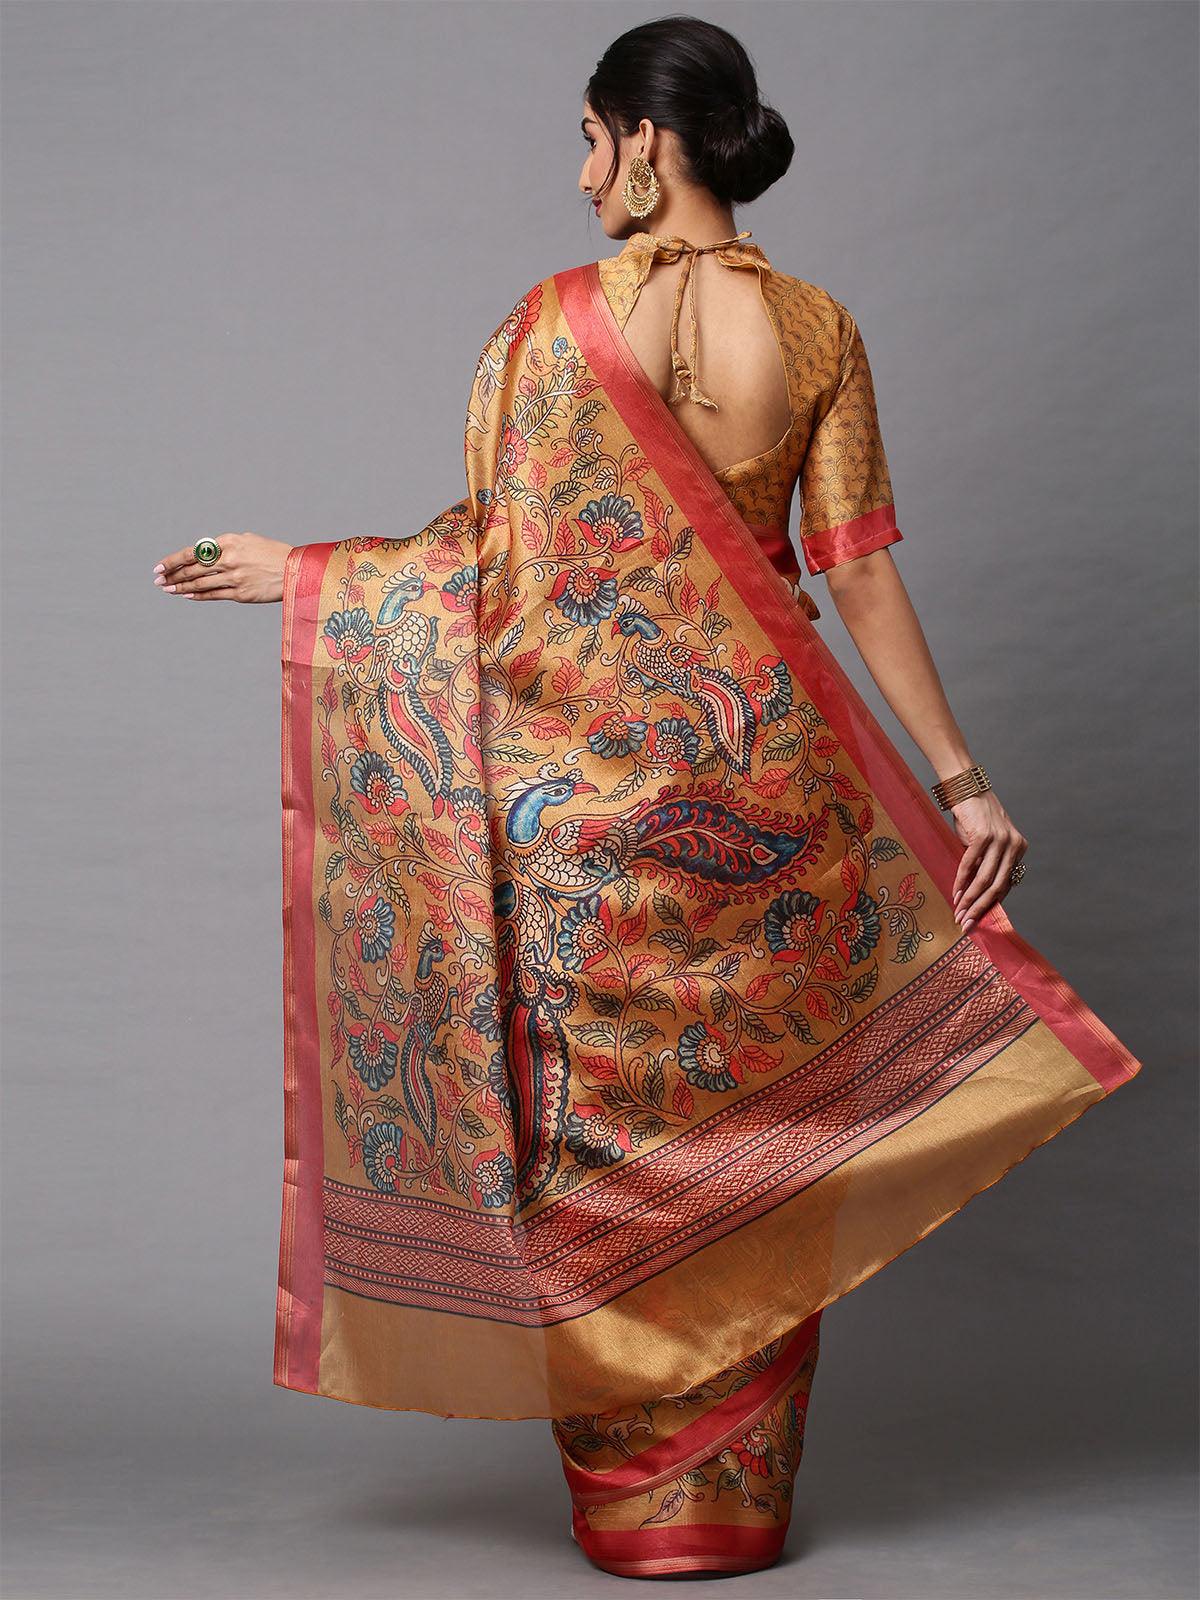 Women's Cotton Linen Beige Printed Celebrity Saree With Blouse Piece - Odette